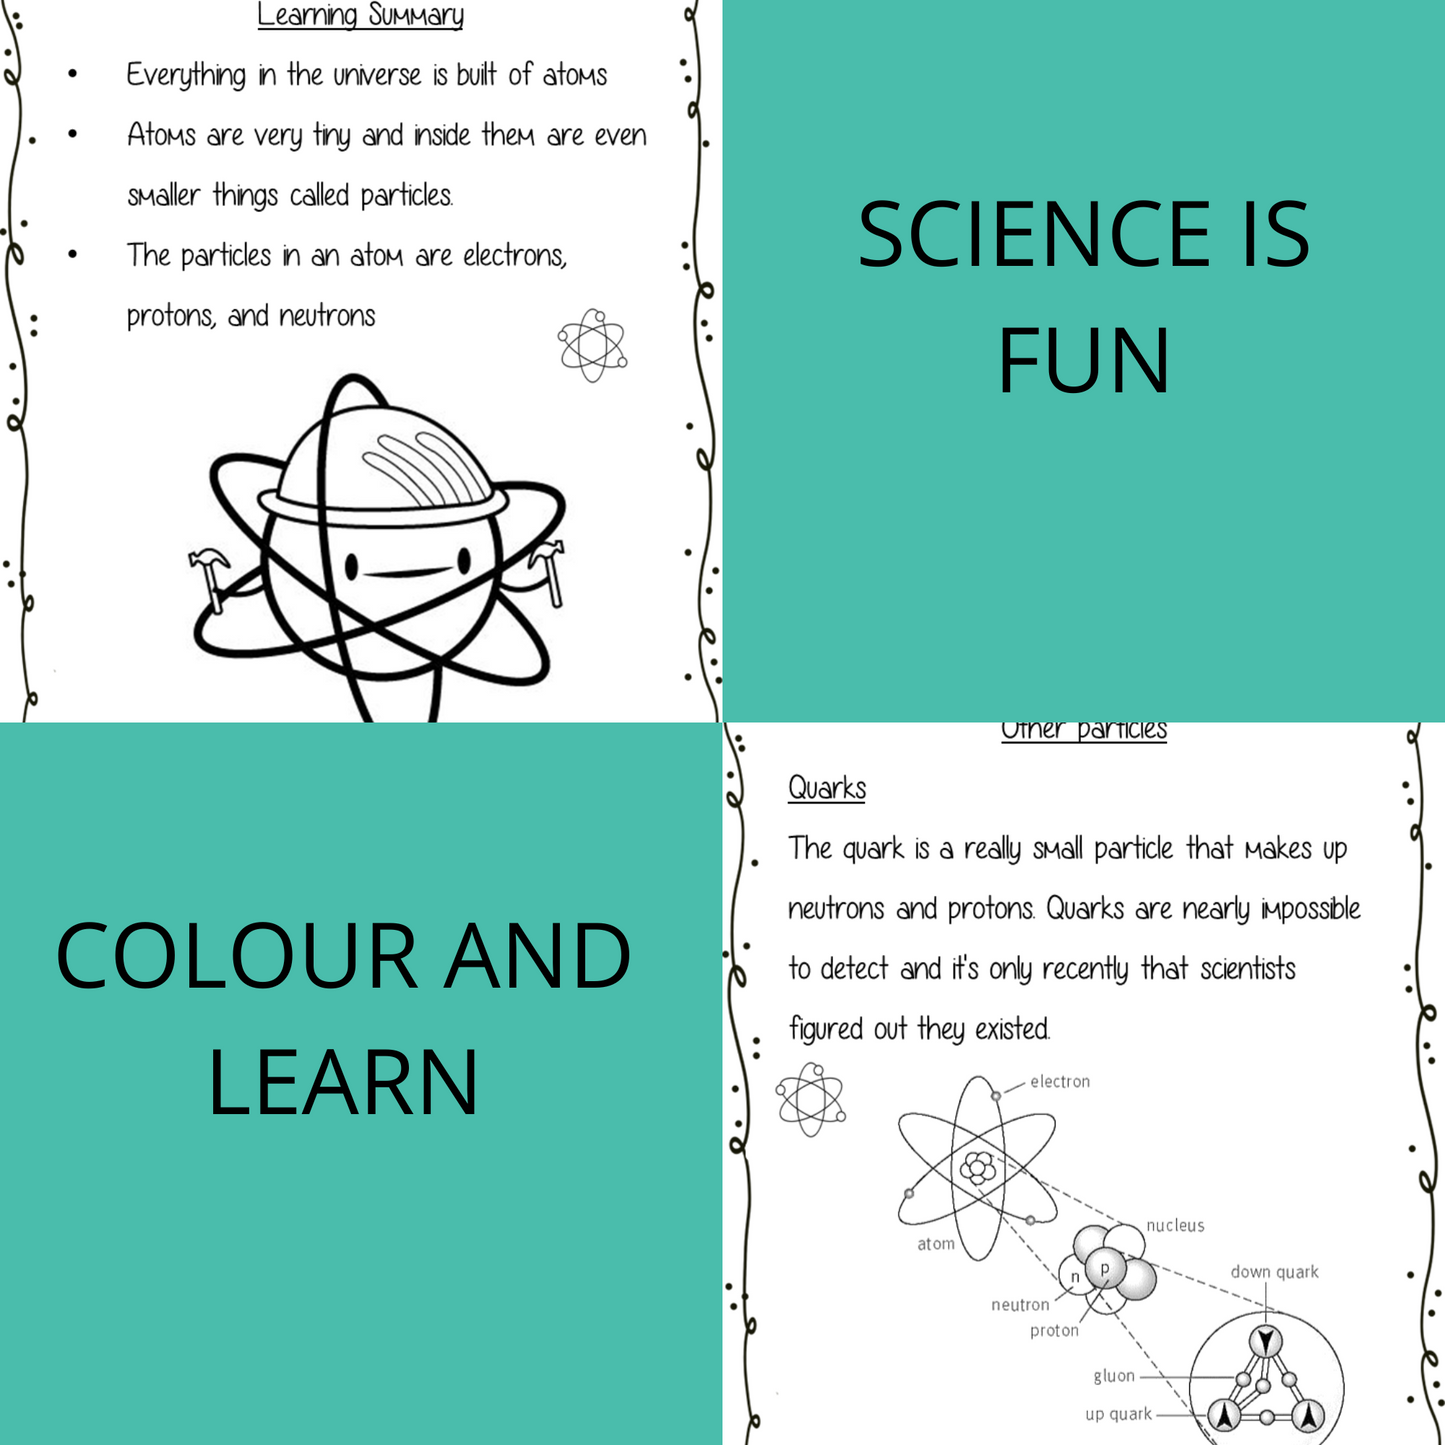 Atoms Science Workbook